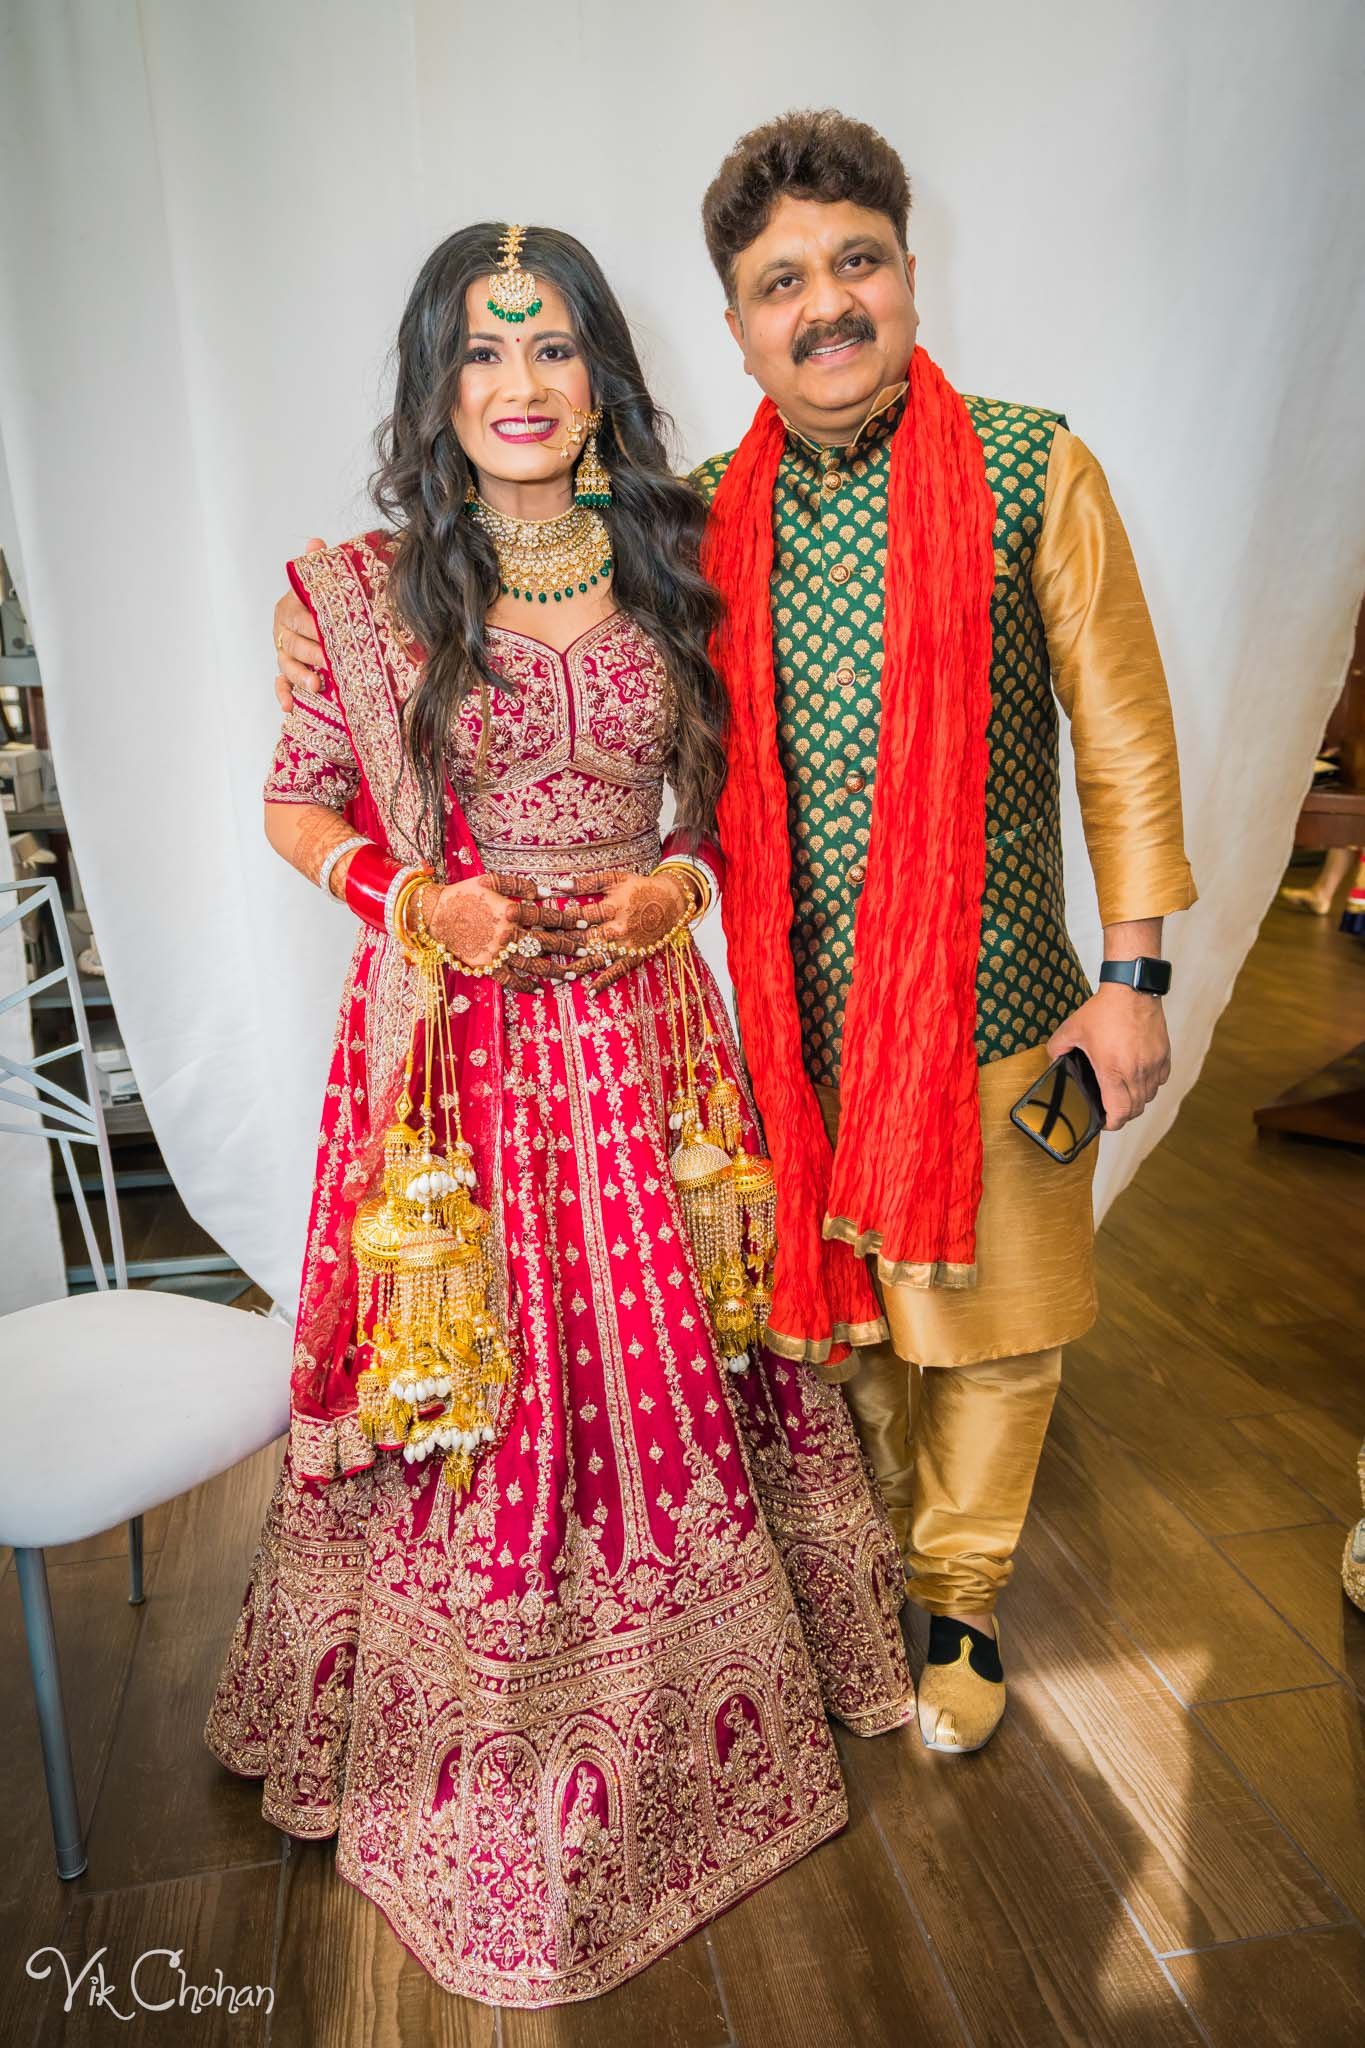 2022-06-09-Annie-&-Steven-Las-Vegas-Indian-Wedding-Ceremony-Photography-Vik-Chohan-Photography-Photo-Booth-Social-Media-VCP-034.jpg